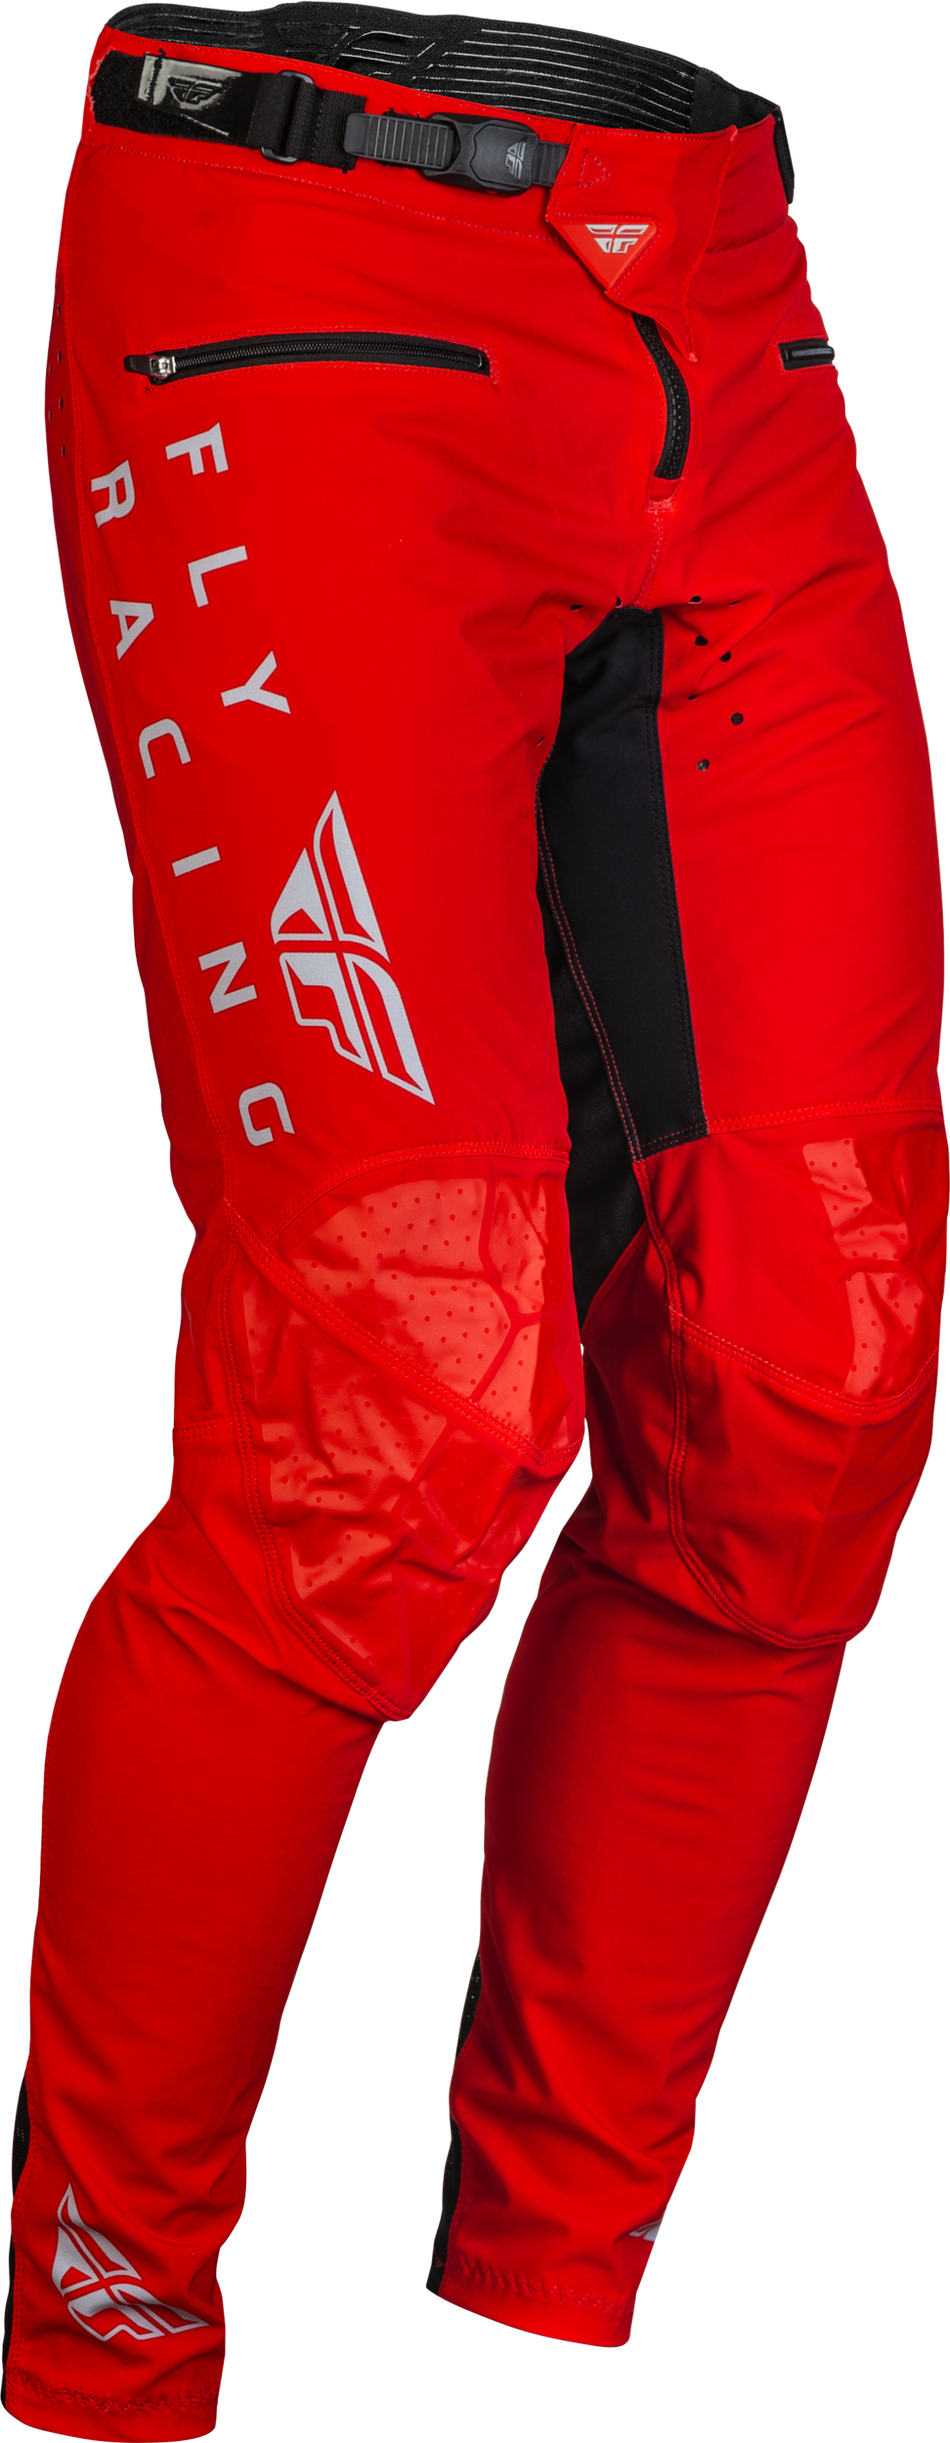 FLY RACING Radium Bicycle Pants Red/Black/Grey Sz 28 376-04328